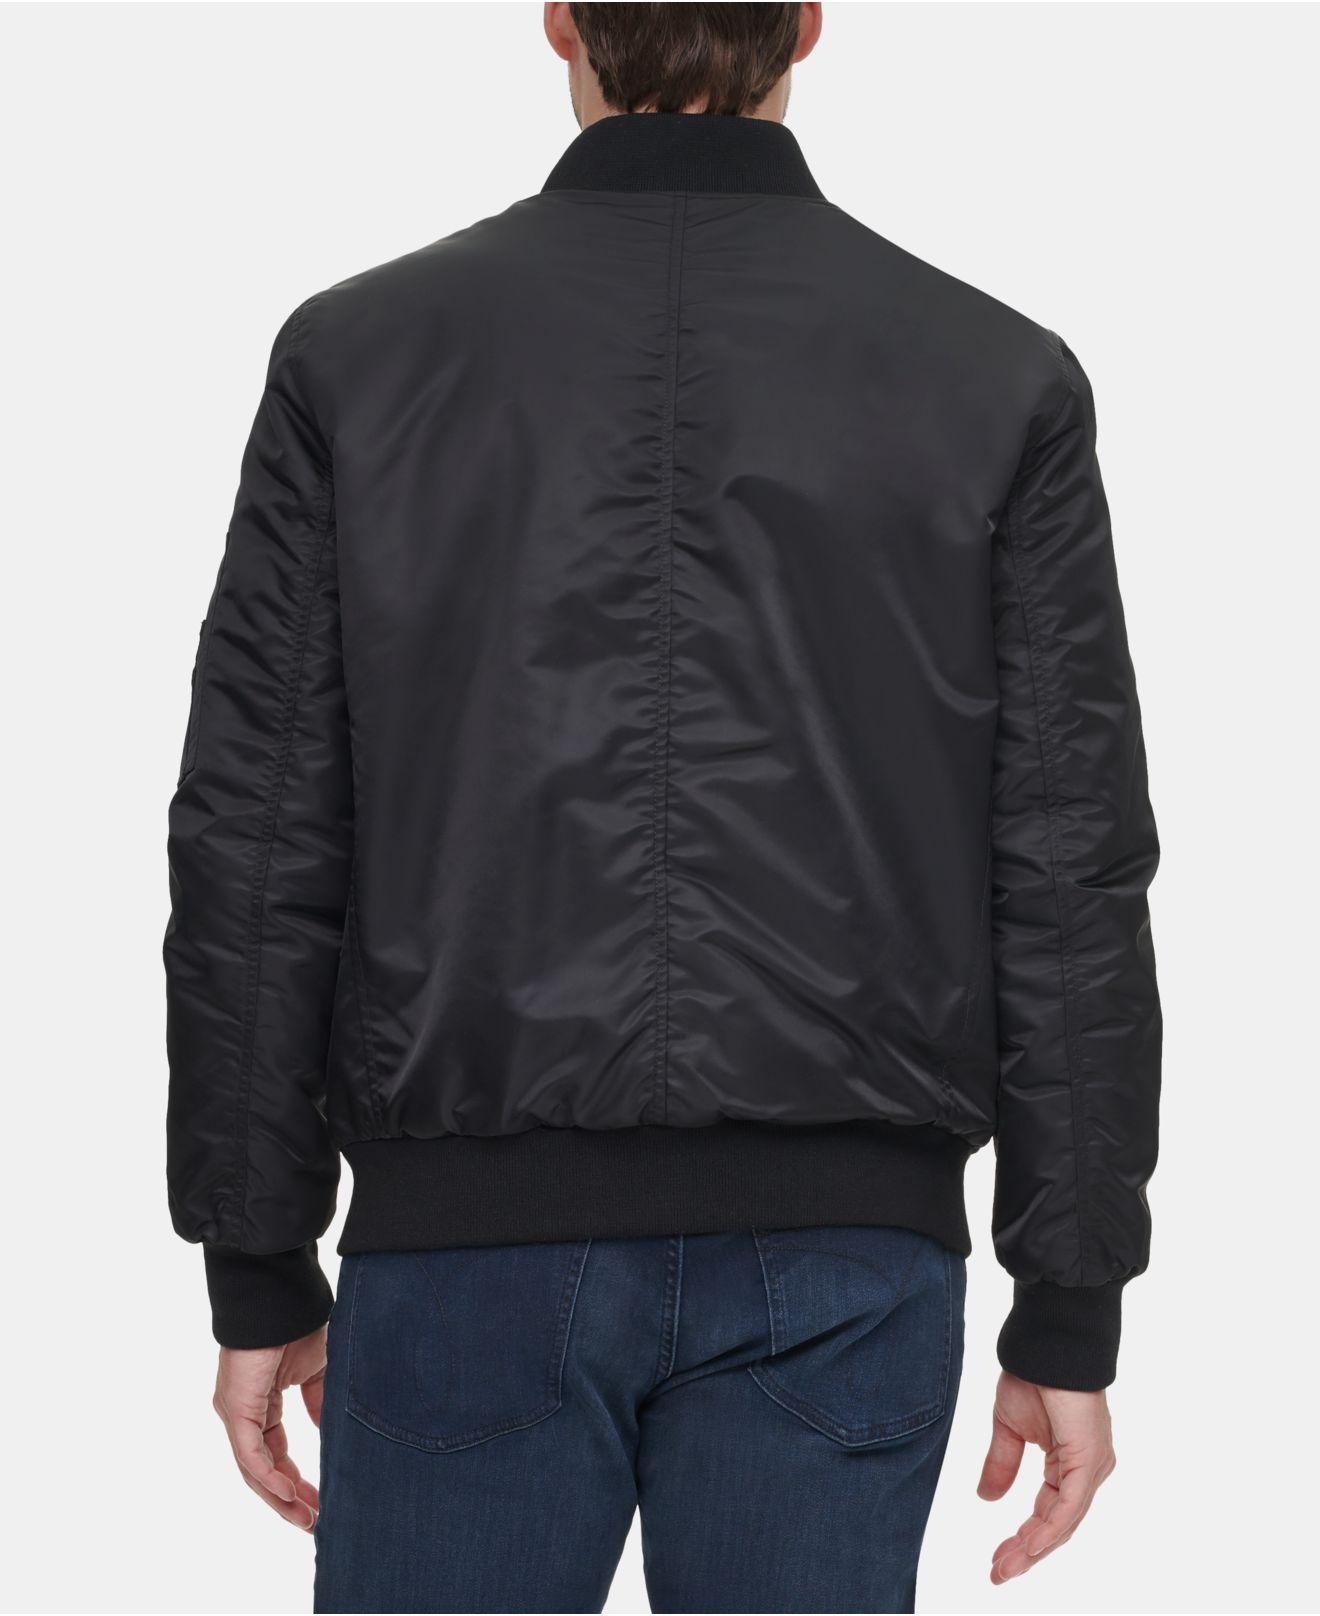 Calvin Klein Bomber Flight Jacket In Black For Men Lyst, 44% OFF